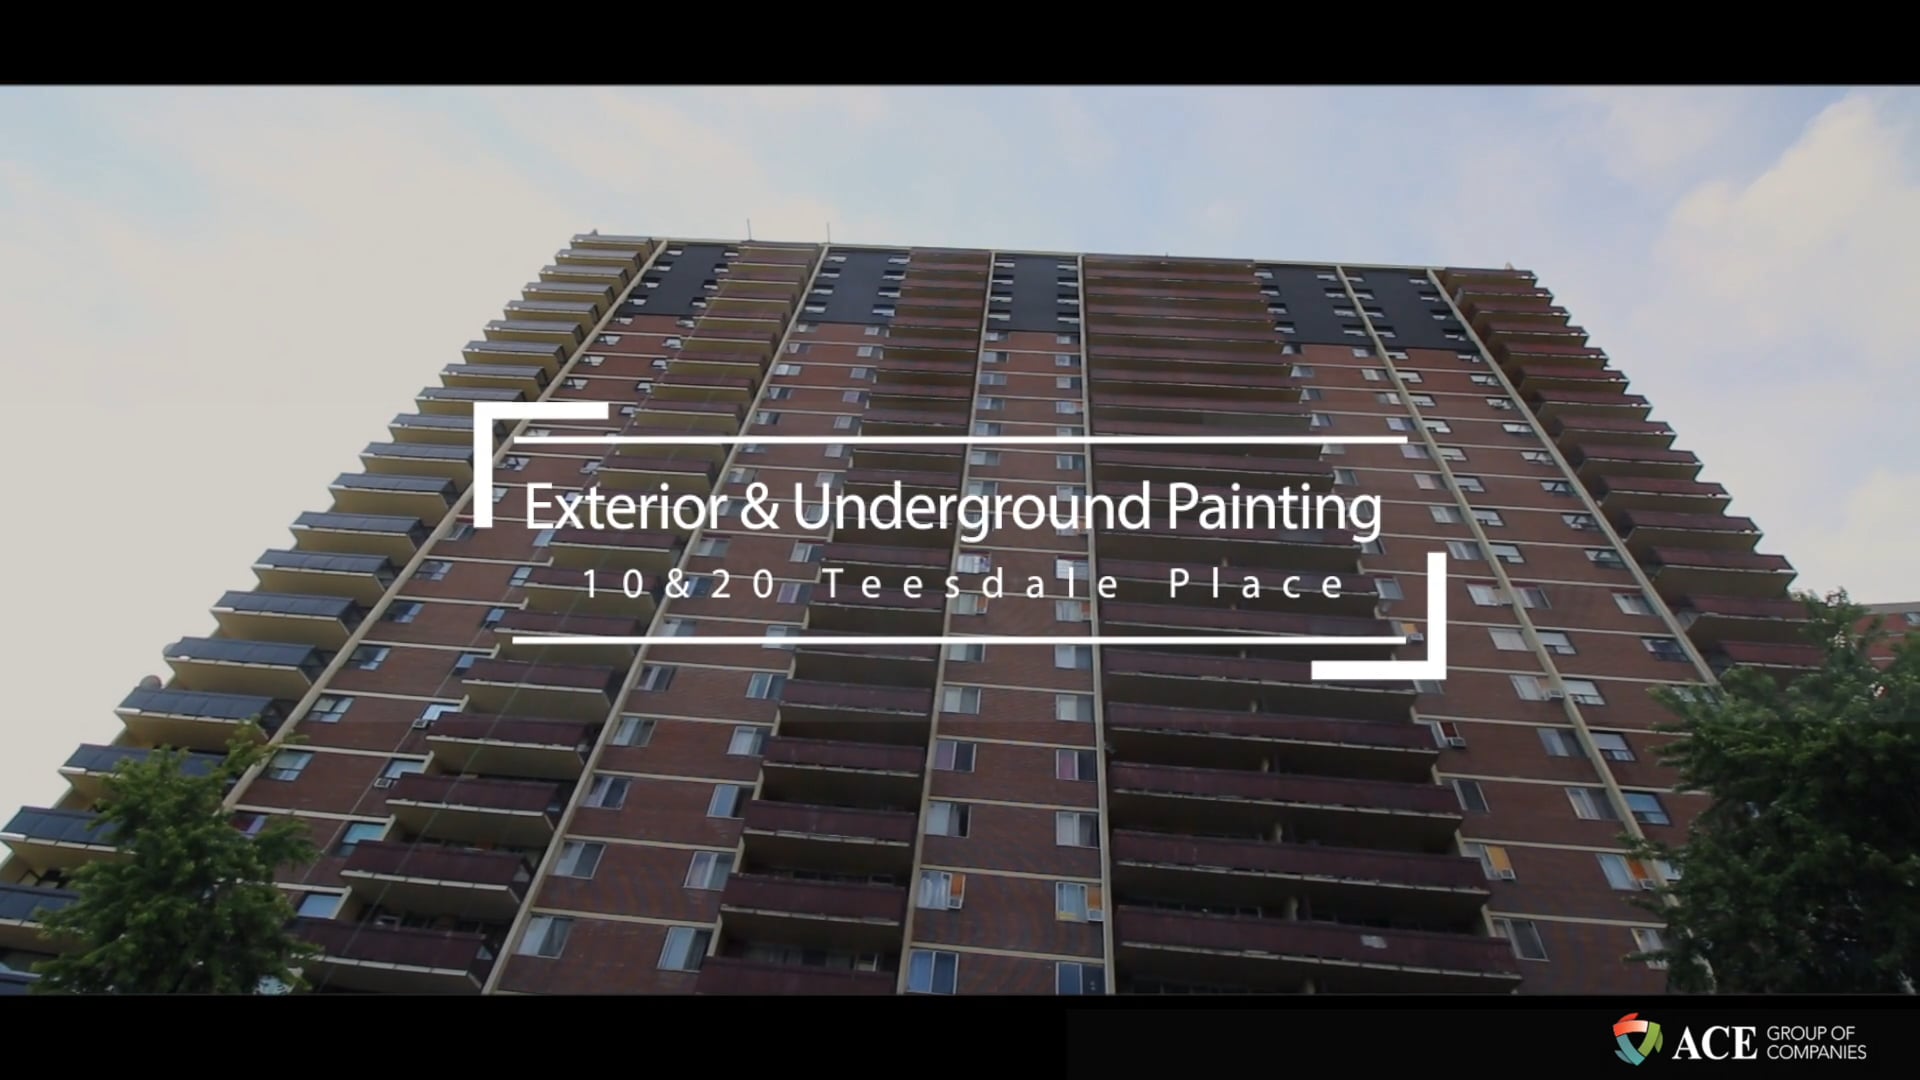 Exterior & Underground Painting